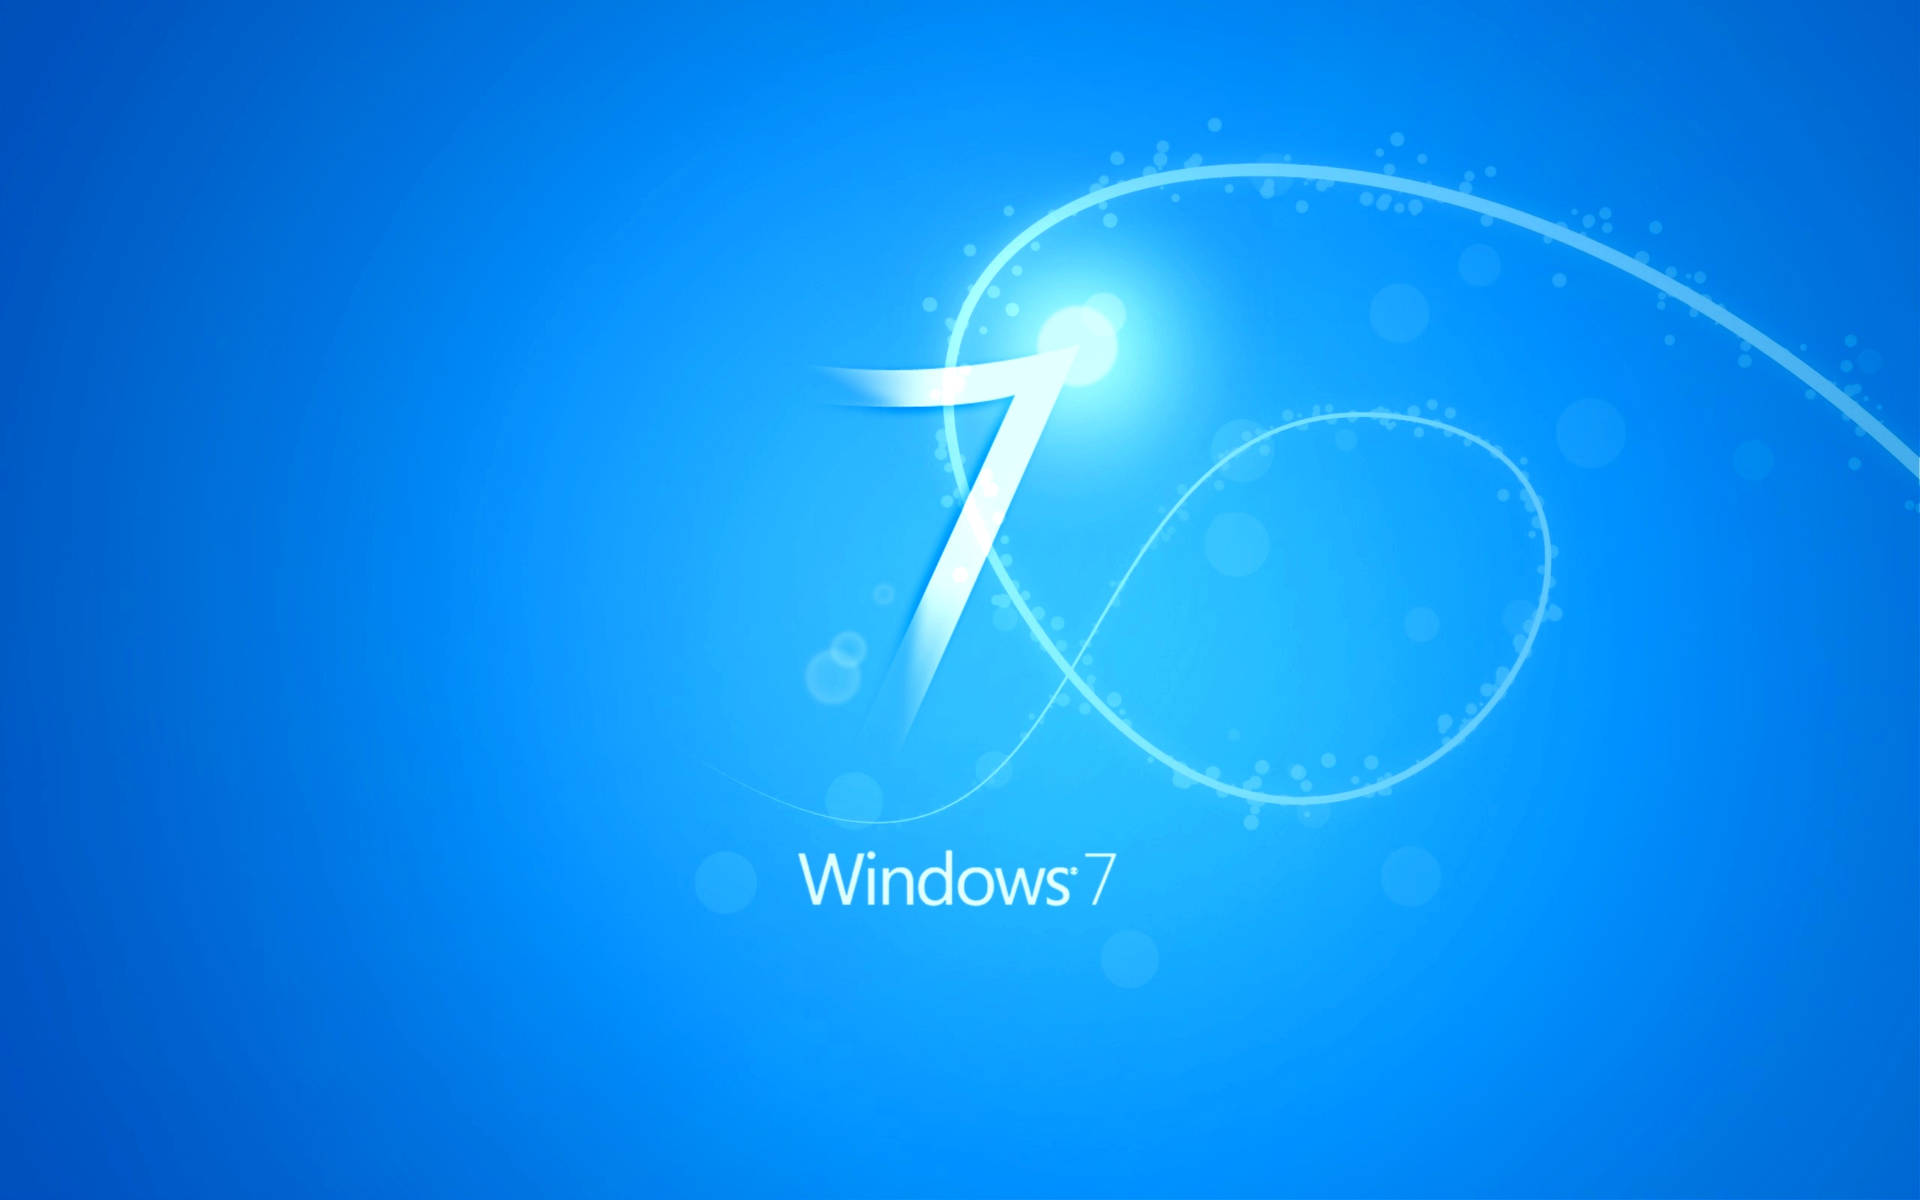 Windows 7 Bright Blue Screen Background